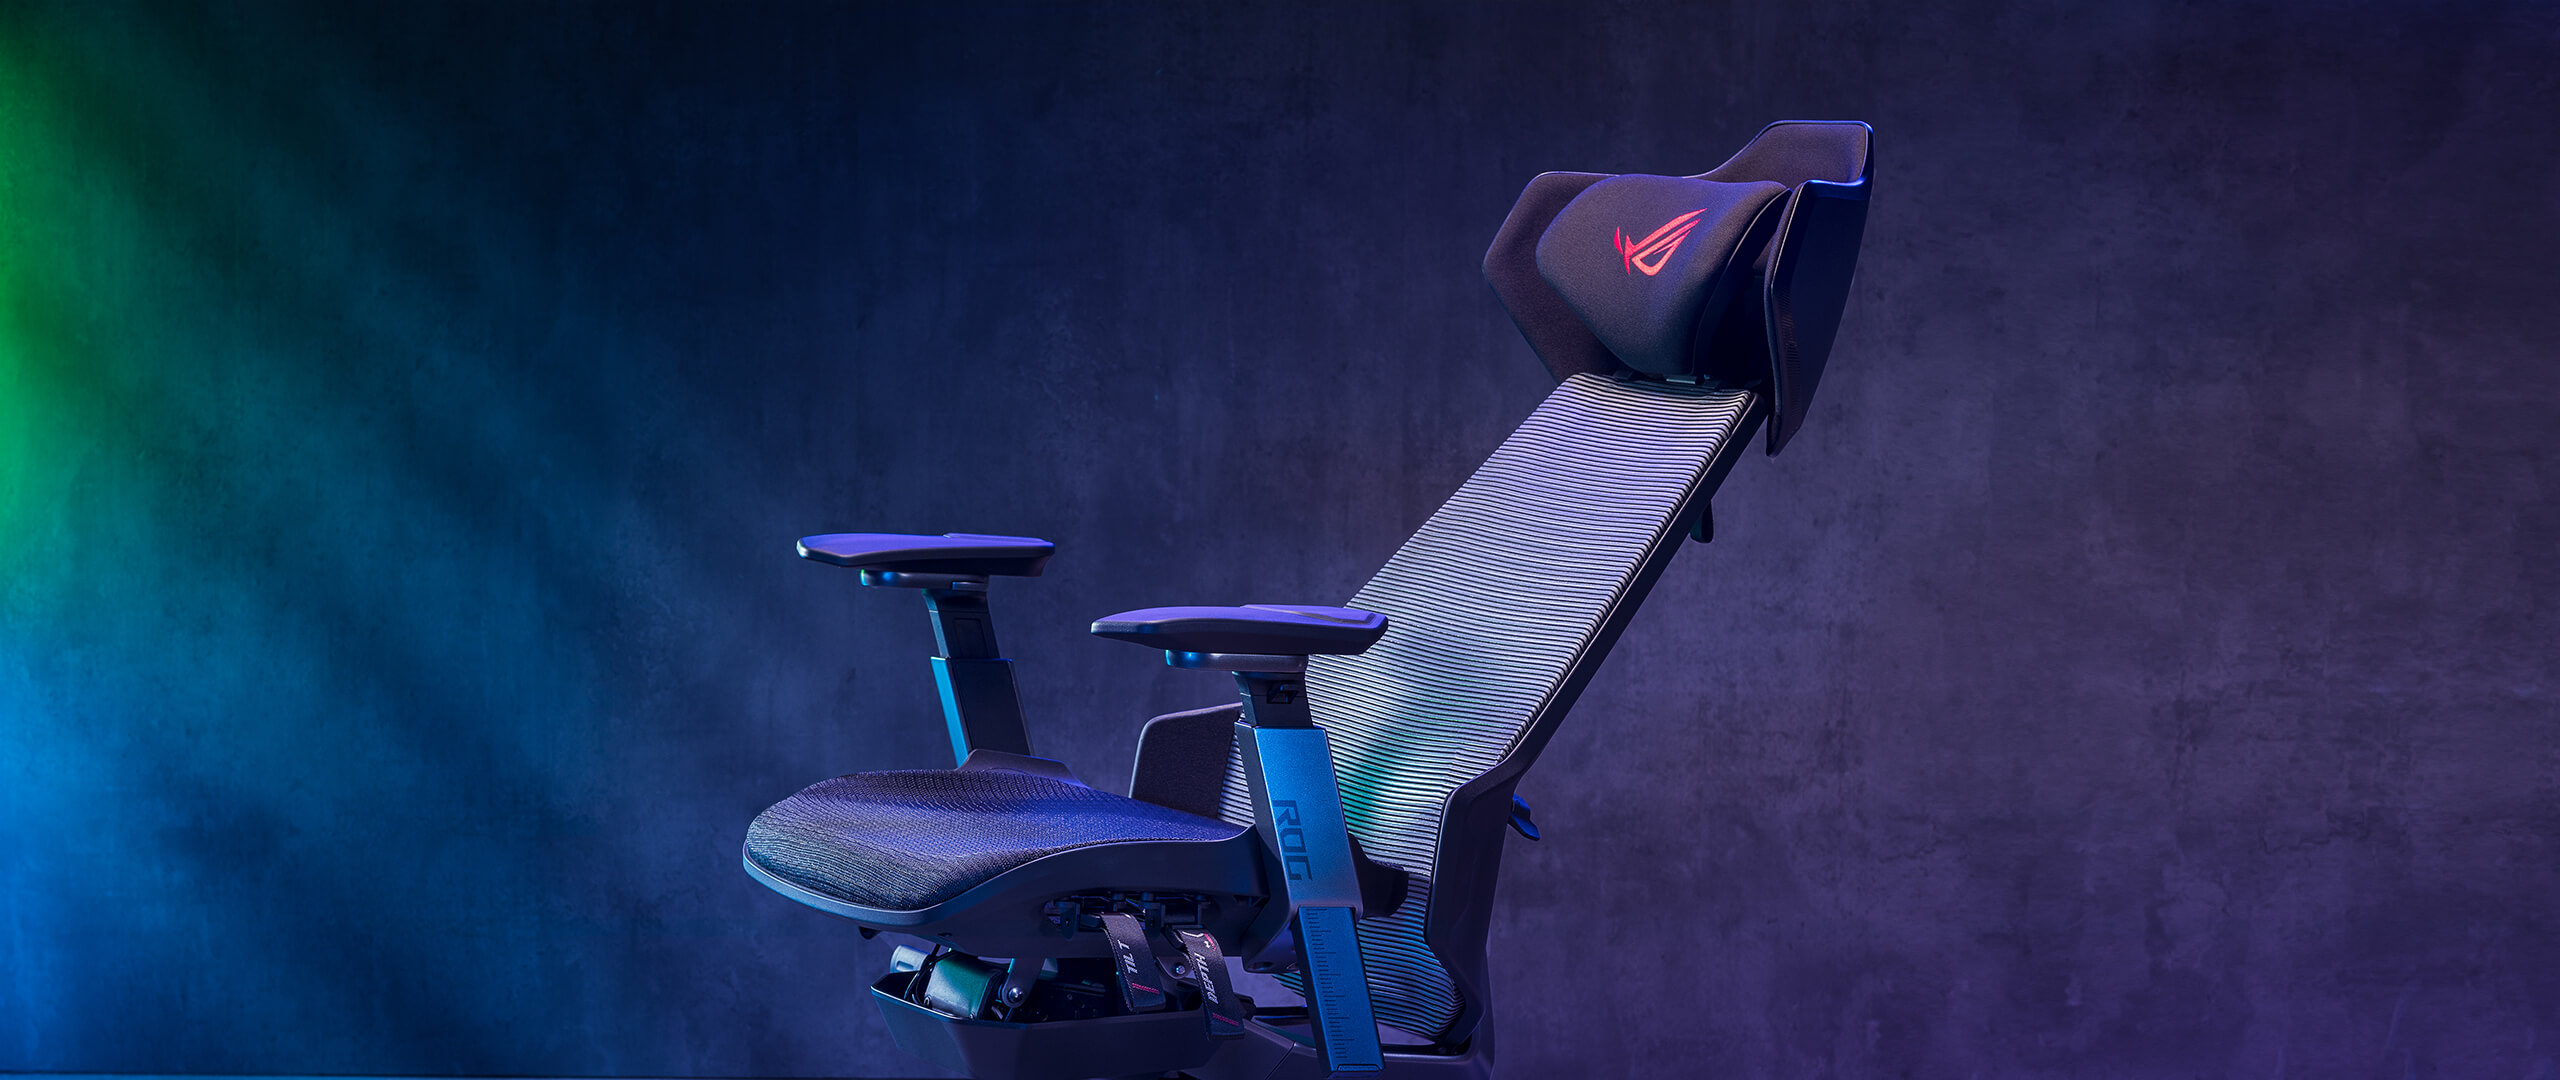 ROG Destrier Ergo Gaming Chair, вигляд збоку з нахиленою спинкою